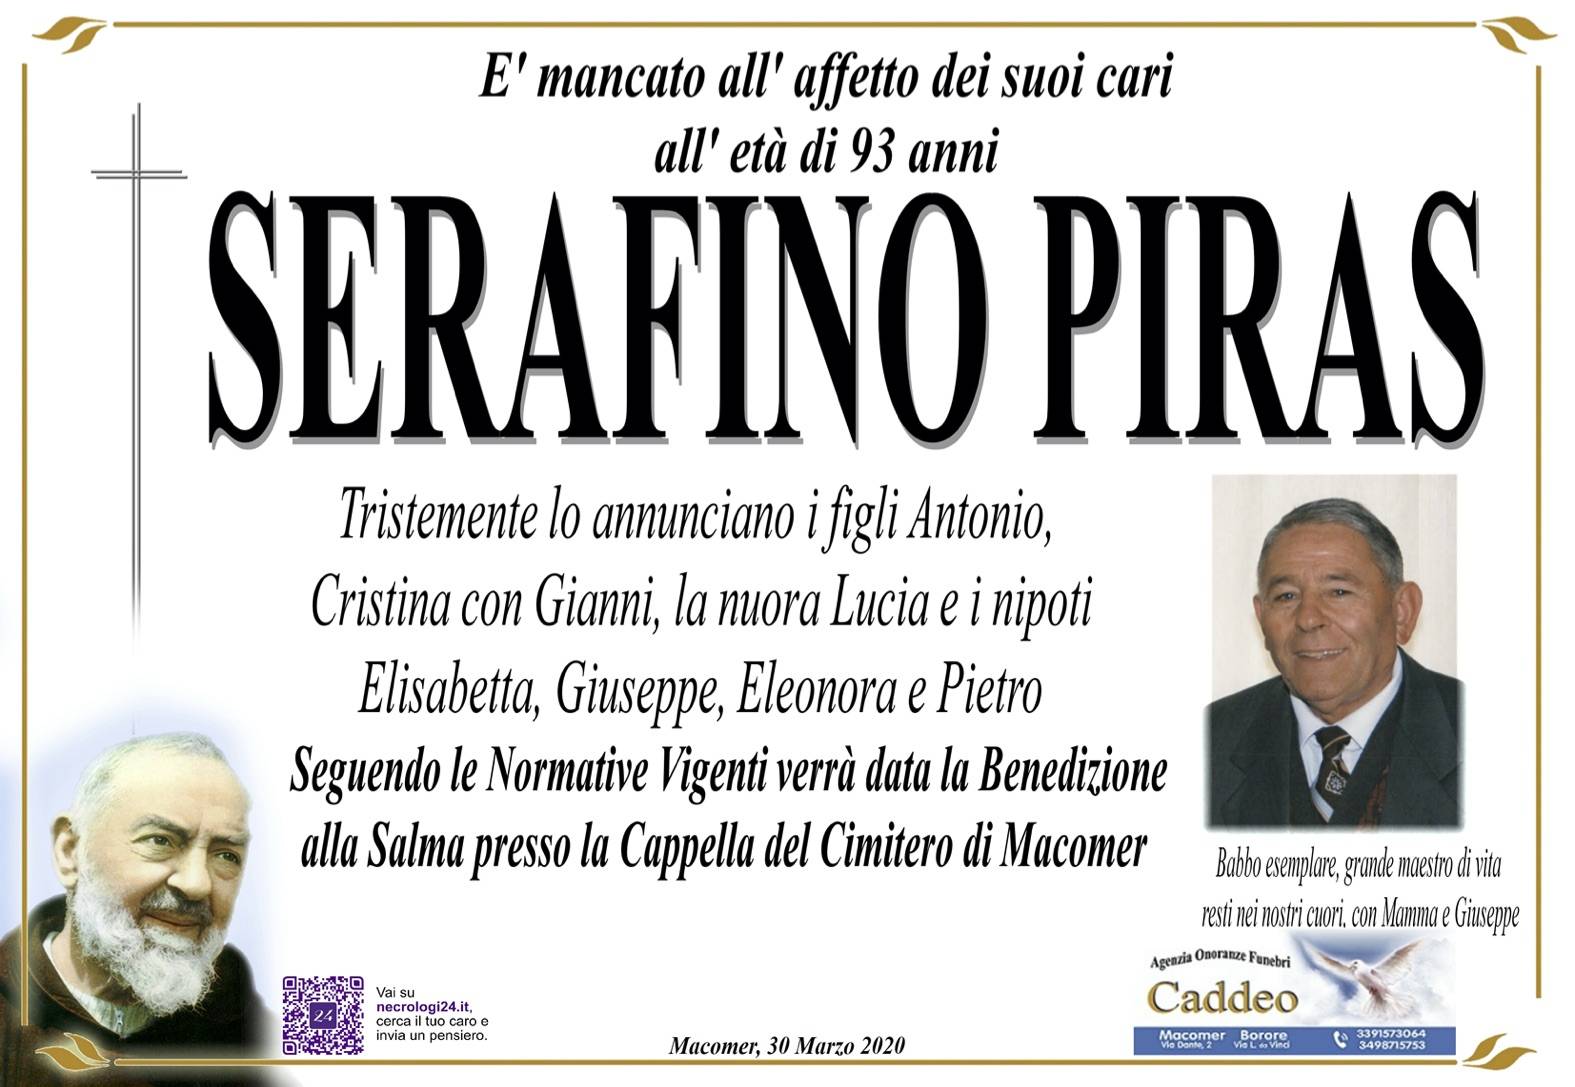 Serafino Piras